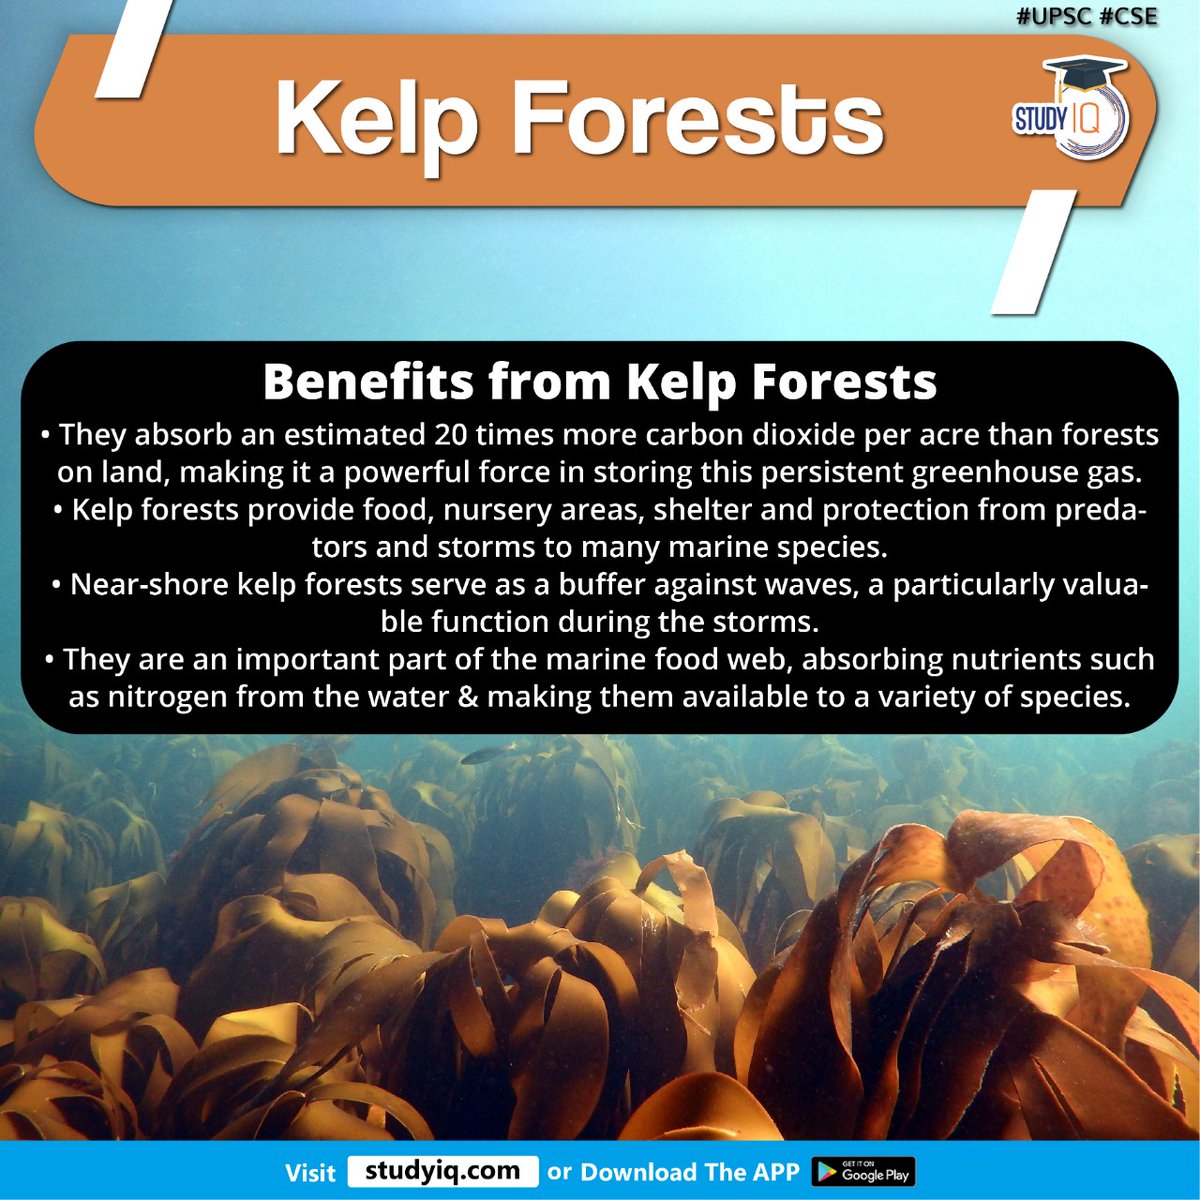 Kelp Forests 

#kelpforests #ecosystems #climatechange #climatestudy #brownalgae #liveincool #shallowwaters #forest #diversityofplants #nutrientrichwaters #kelpforestsbenefits #forestsonland #greenhouse #marinespecies #varietyofspecies #foodweb #upsc #cse #ips #ias